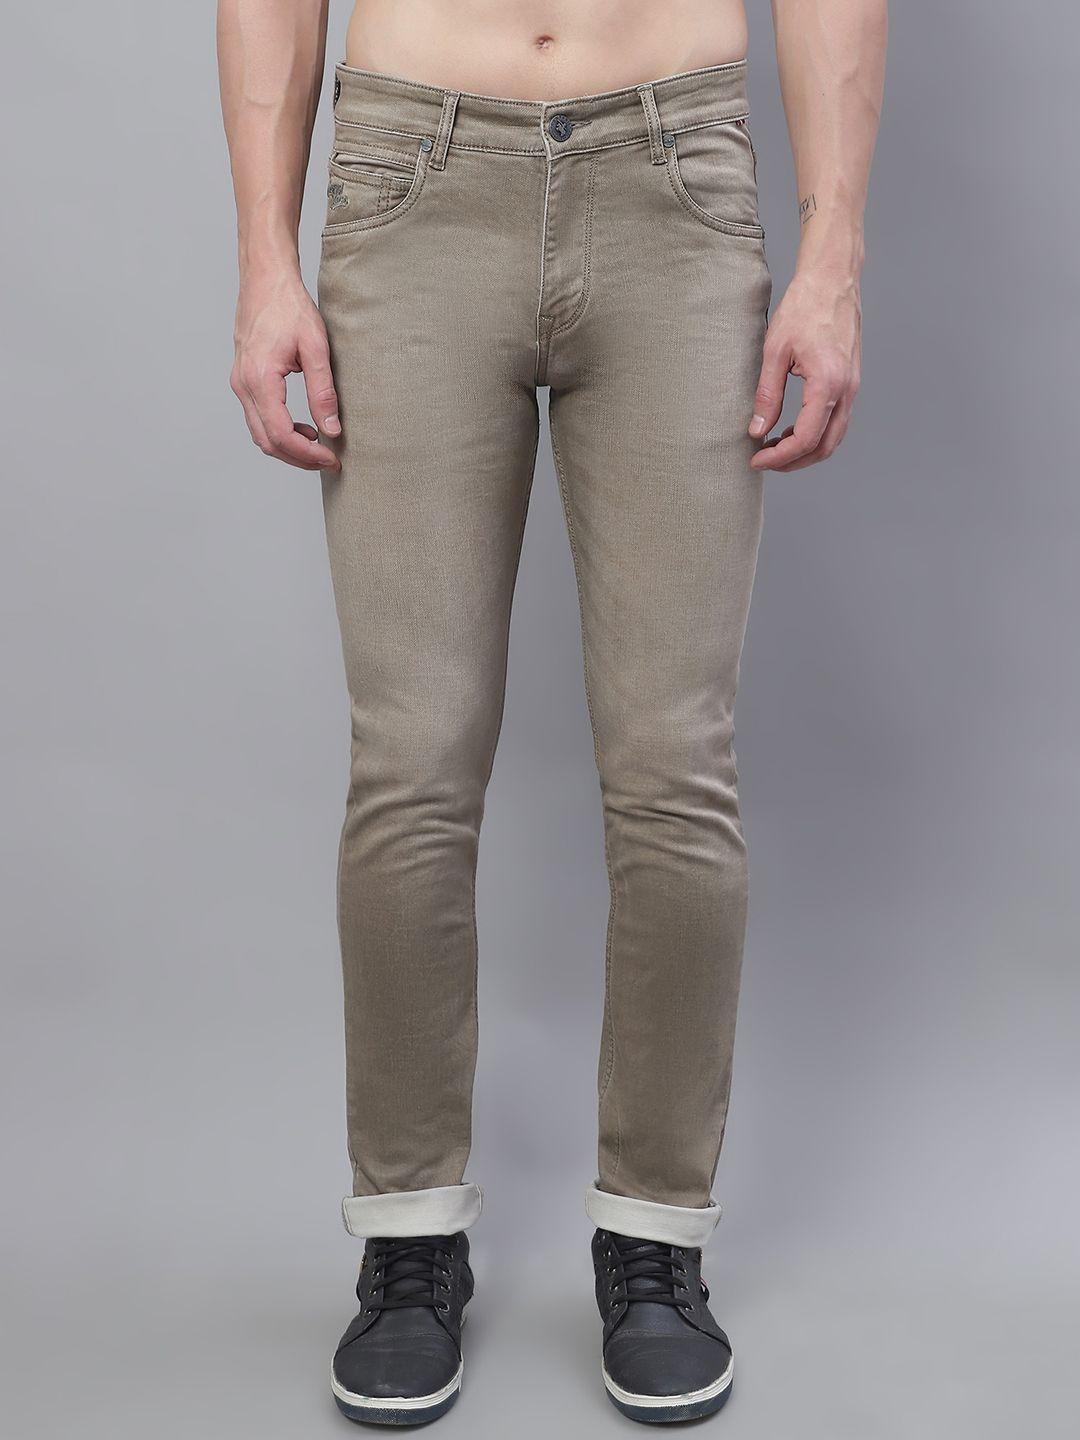 cantabil men comfort mid-rise stretchable cotton jeans